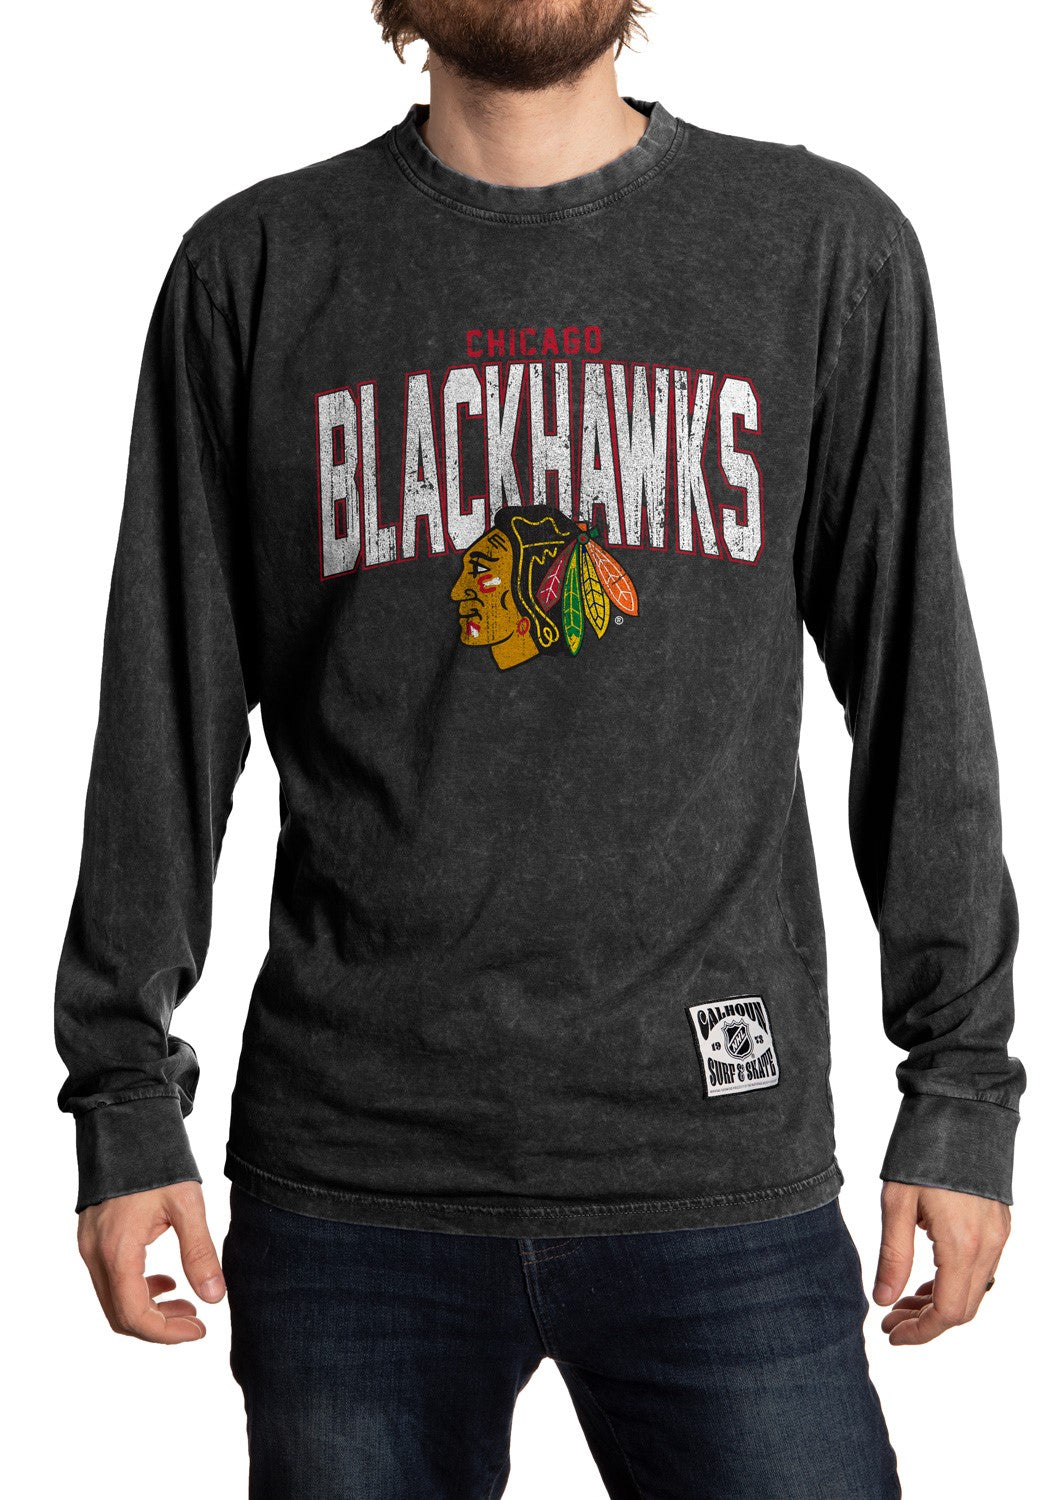 Chicago Blackhawks Acid Wash Long Sleeve Shirt Front View